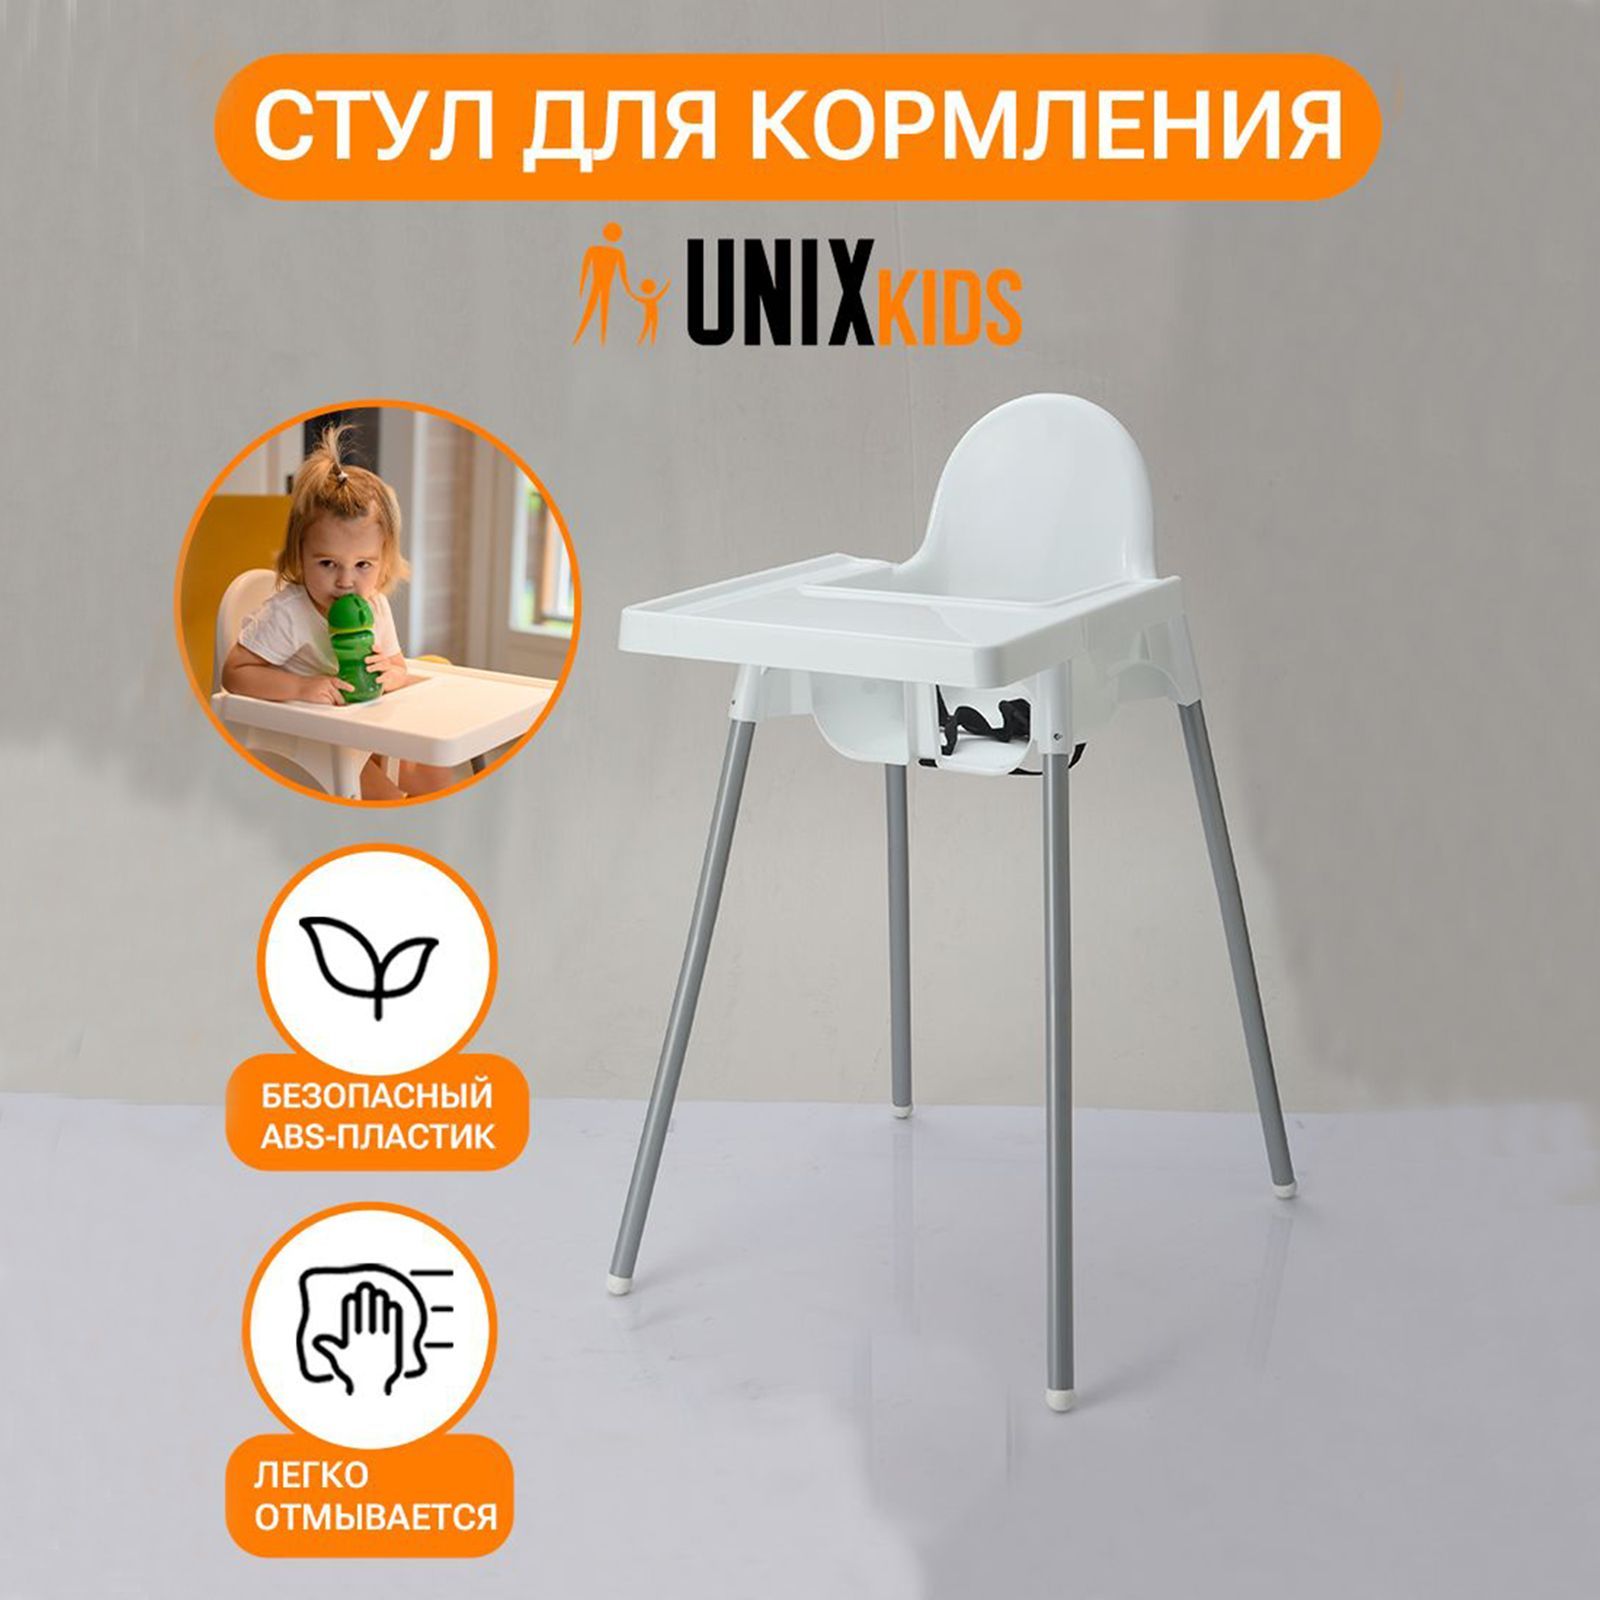 Стульчик для кормления UNIX Kids Fixed White - аналог ИКЕА, со столиком стульчик для кормления forest kids lunes